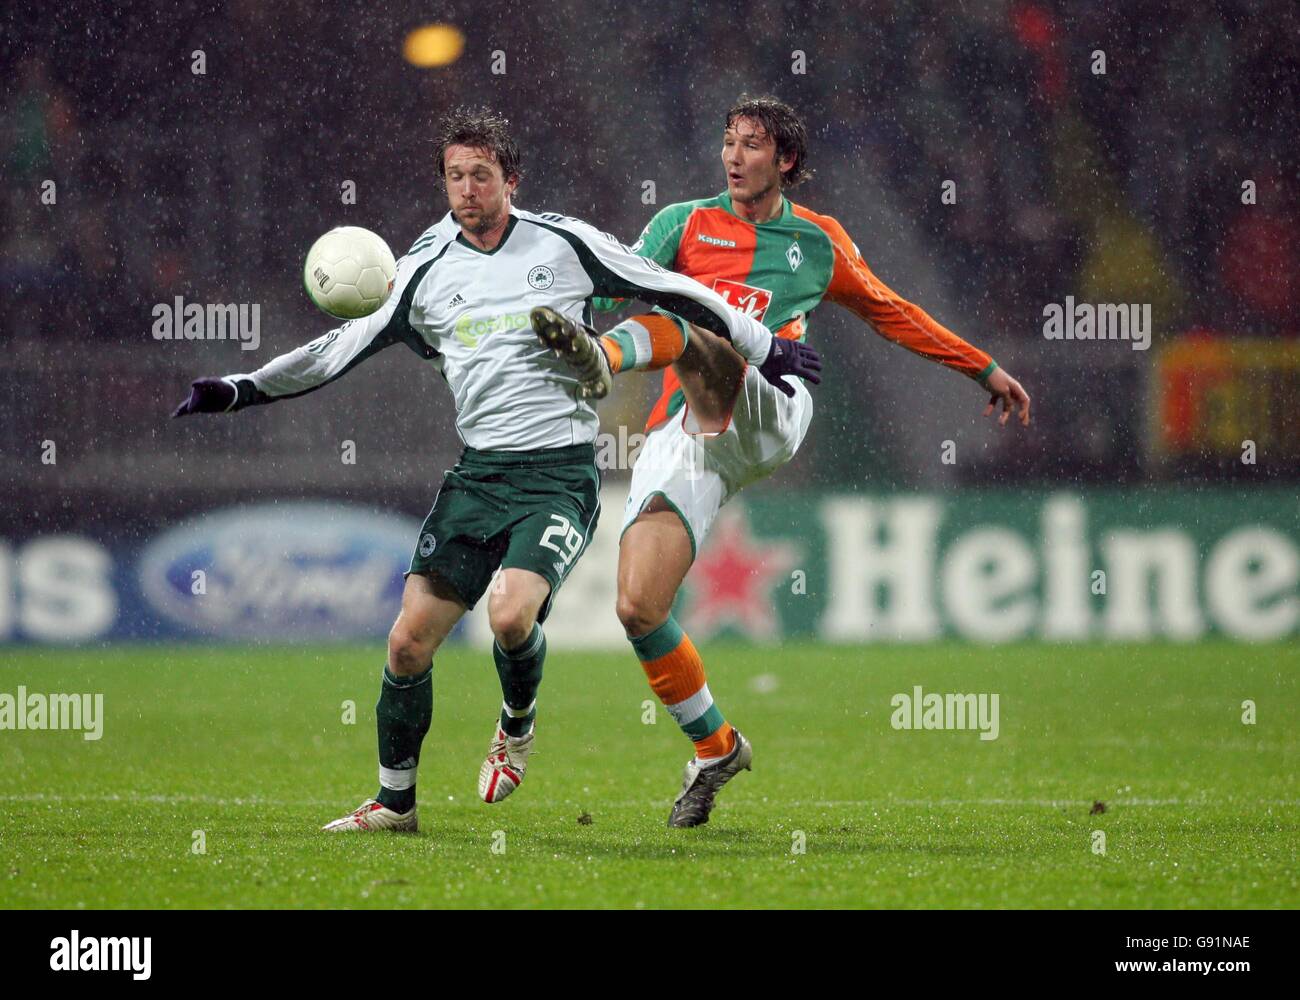 Soccer - UEFA Champions League - Group C - Werder Bremen v Panathinaikos - Weserstadion Stock Photo